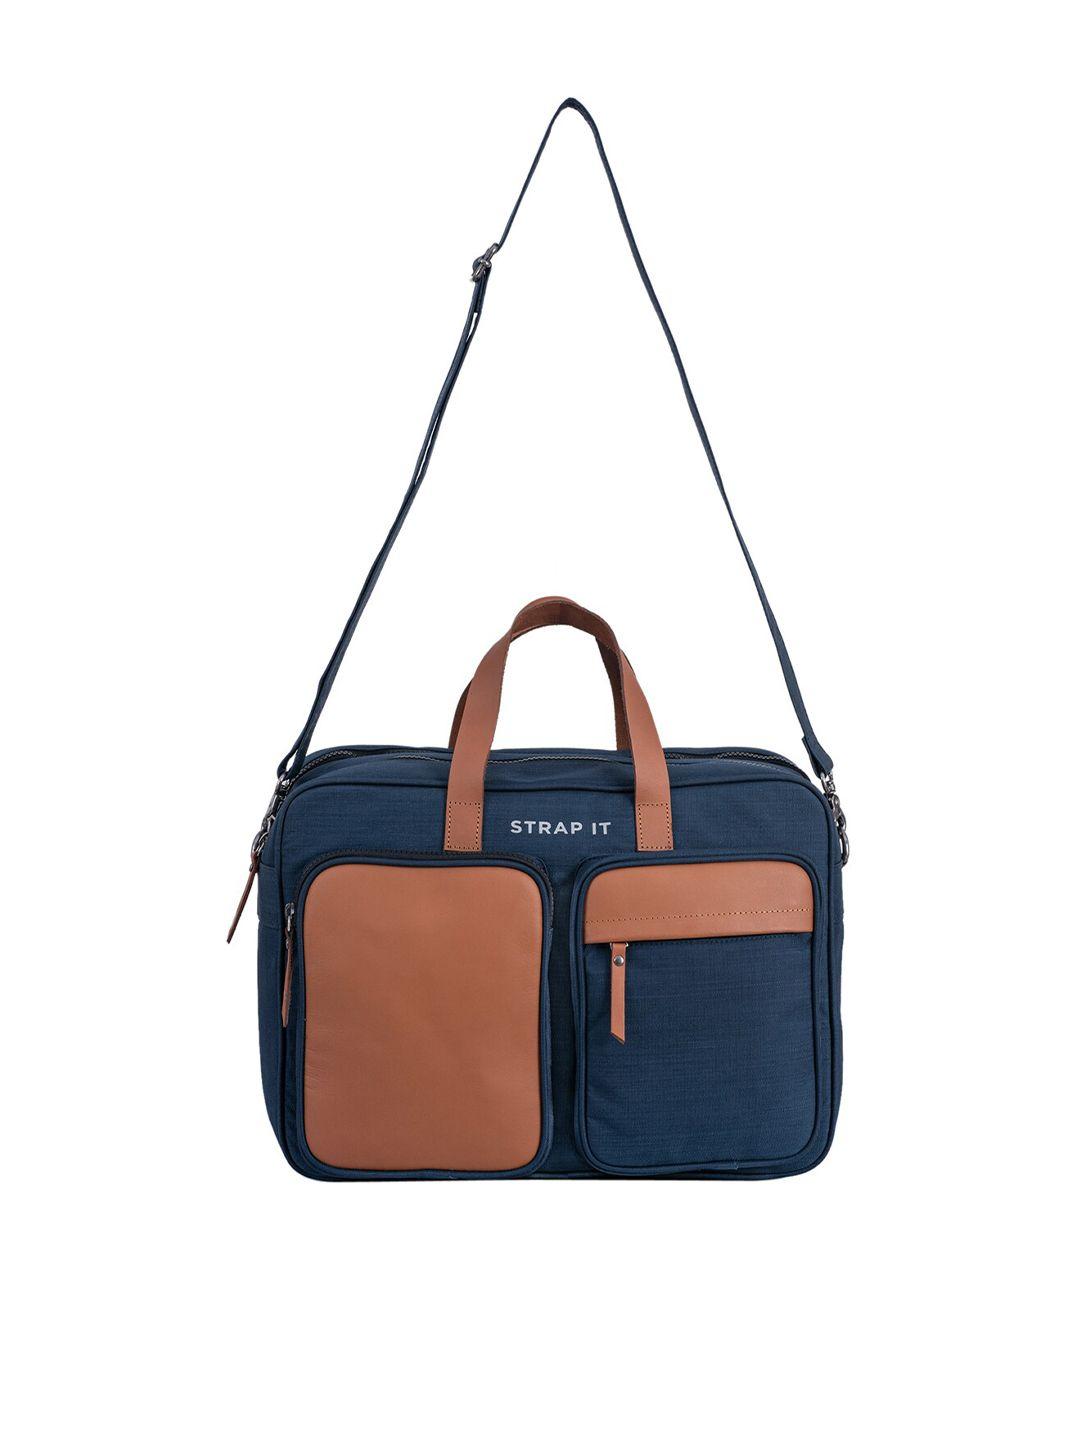 strap it men navy blue & tan brown colourblocked 16 inch water resistant laptop bag